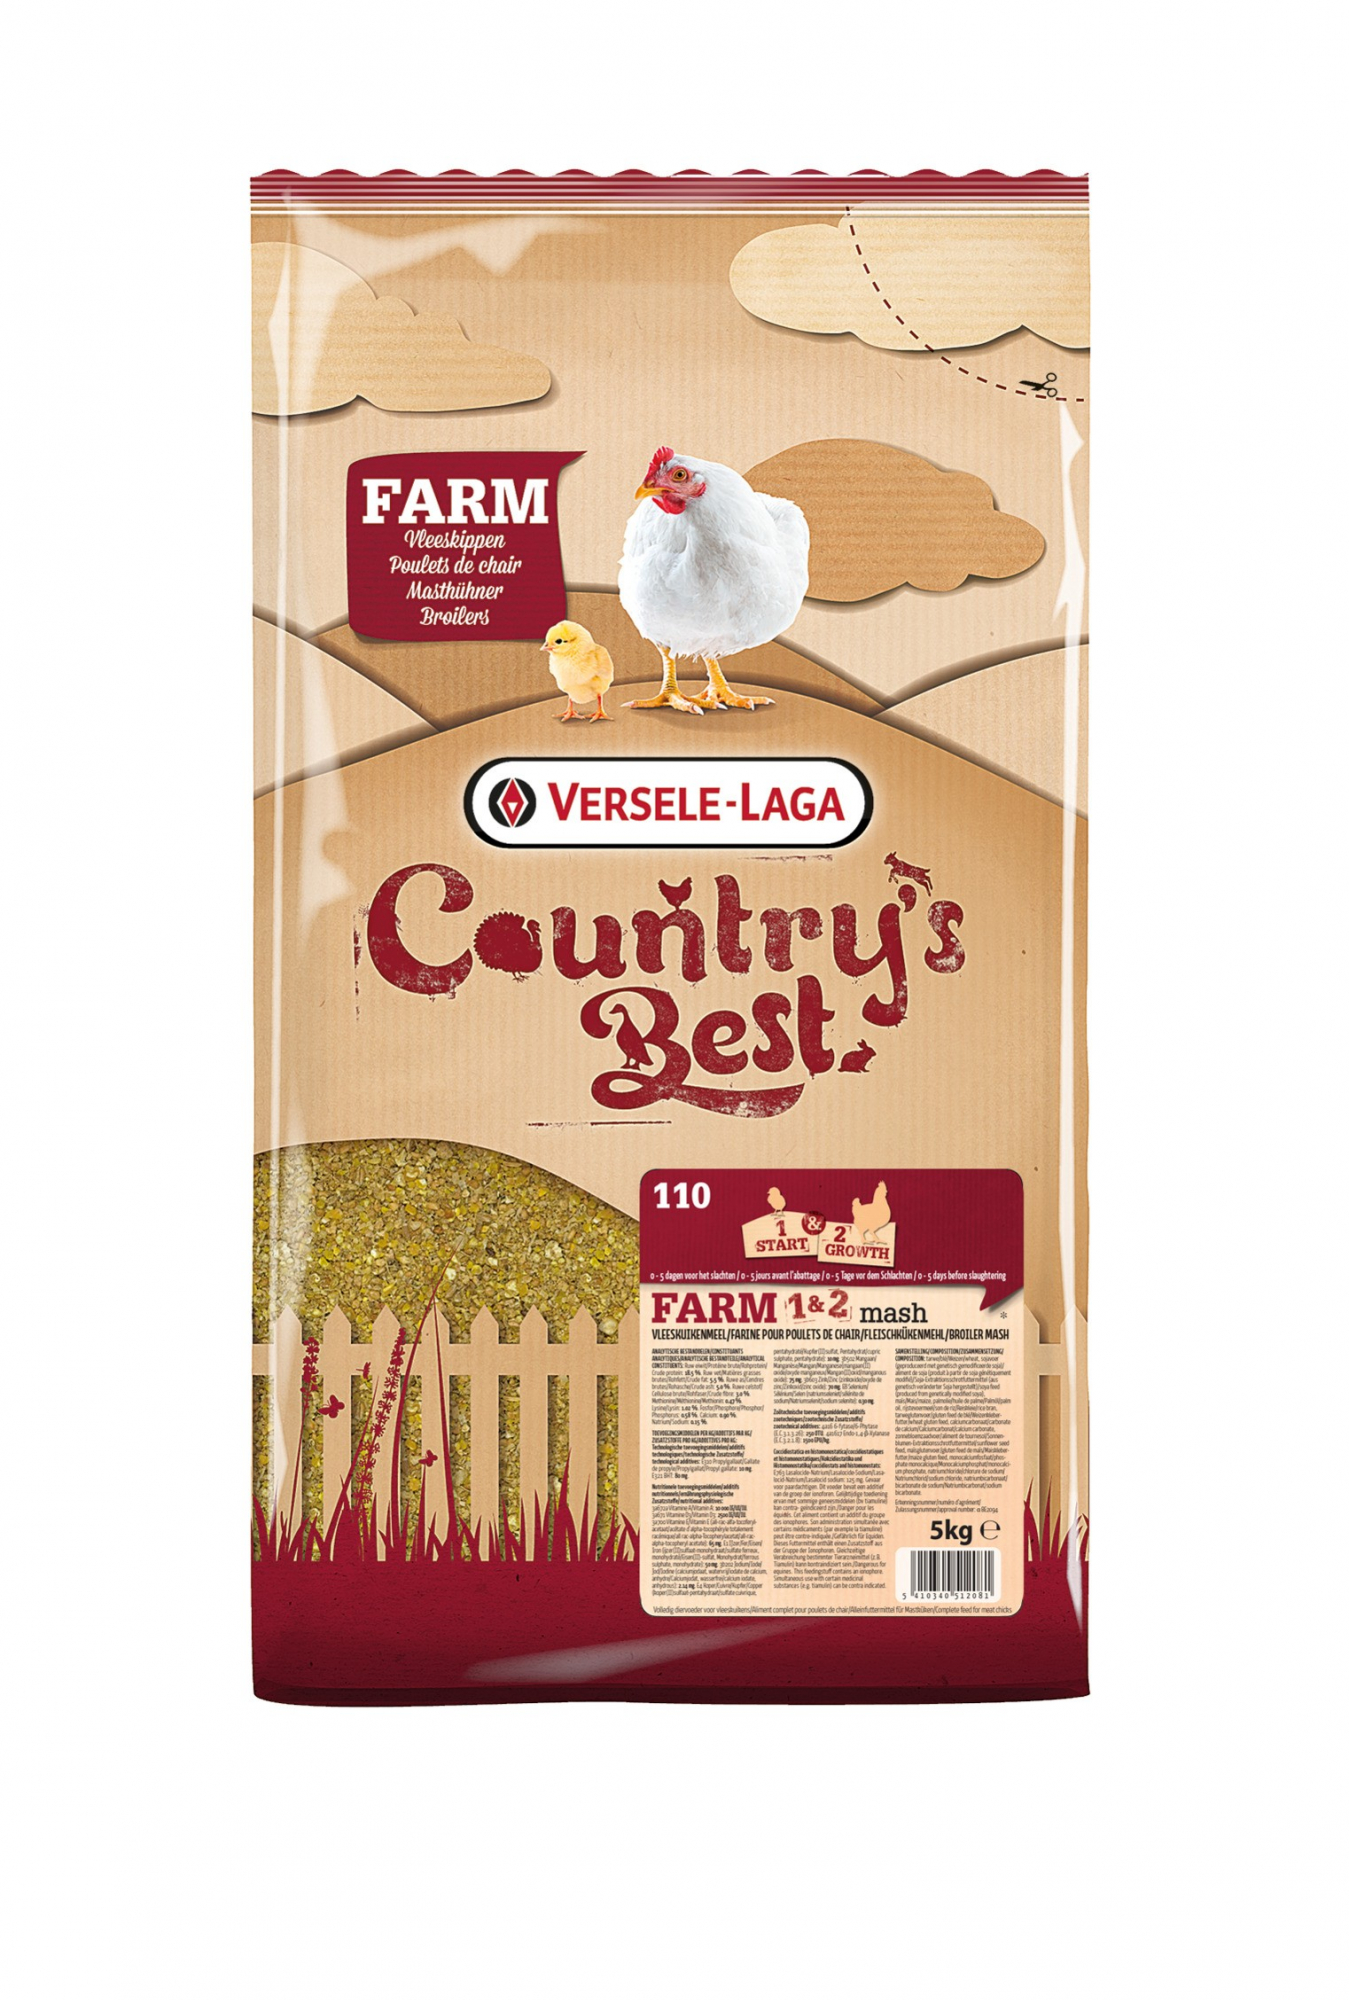 Farm 1&2 Mash Country's Best Farine para frangos de engorda